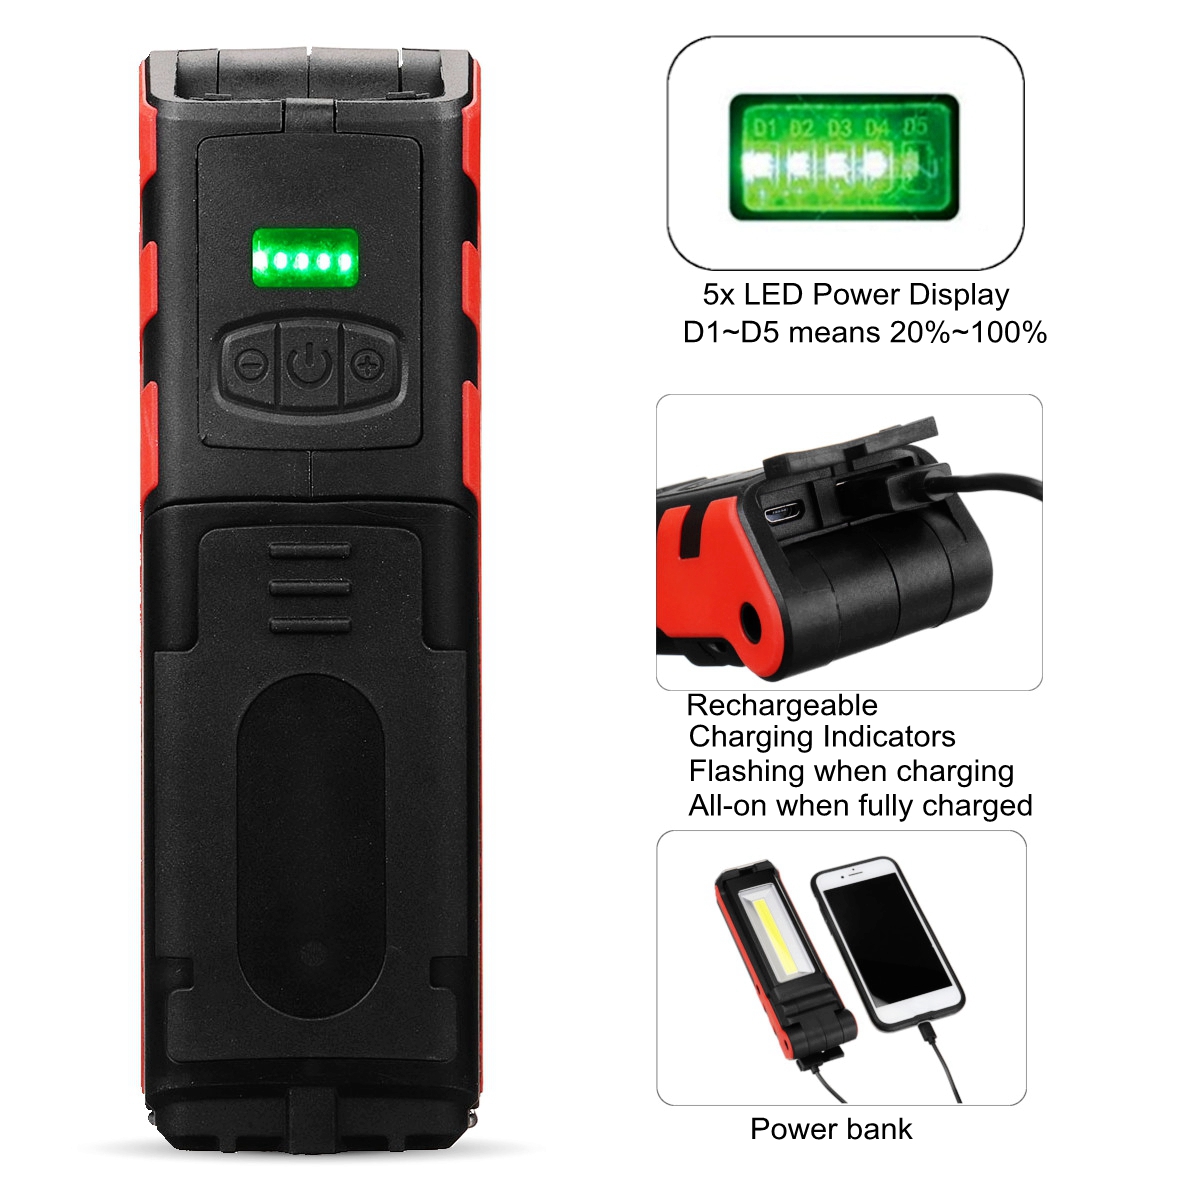 2LEDCOB-400LM-USB-Rechargeable-Foldable-Car-Maintenance-Light-Work-Light-LED-Flashlight-Power-Bank-1632766